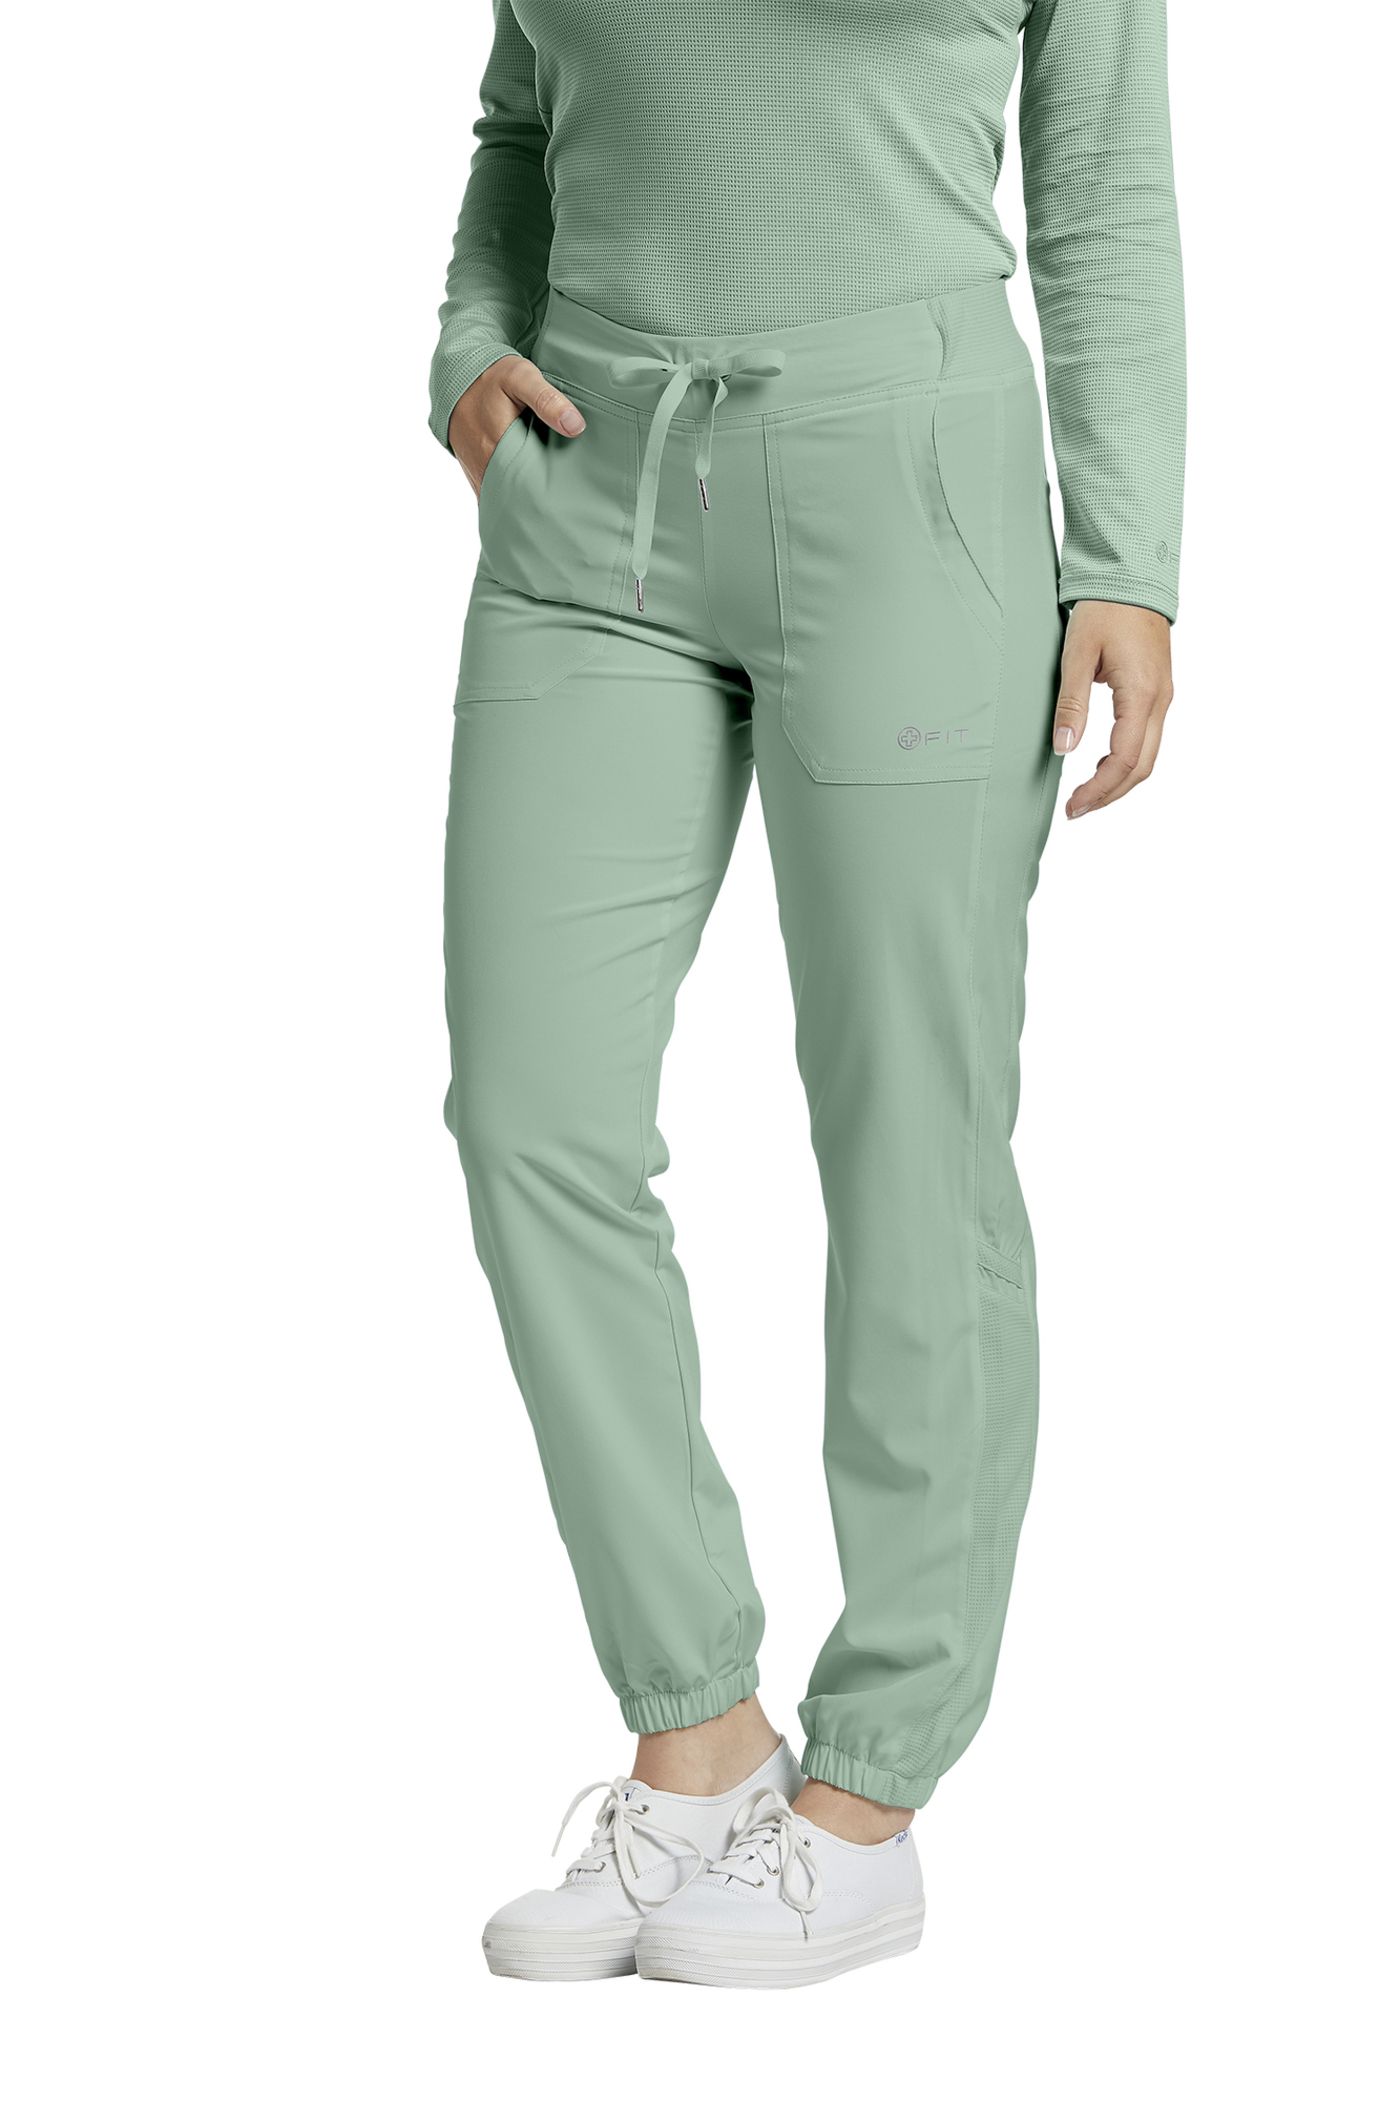 QUYUON Fishing Pants Deals Solid Color Drawstring Elastic Waist Pocket  Casual Trousers Pants Womans Pants Full Length Pant Leg Loungewear Style  P855